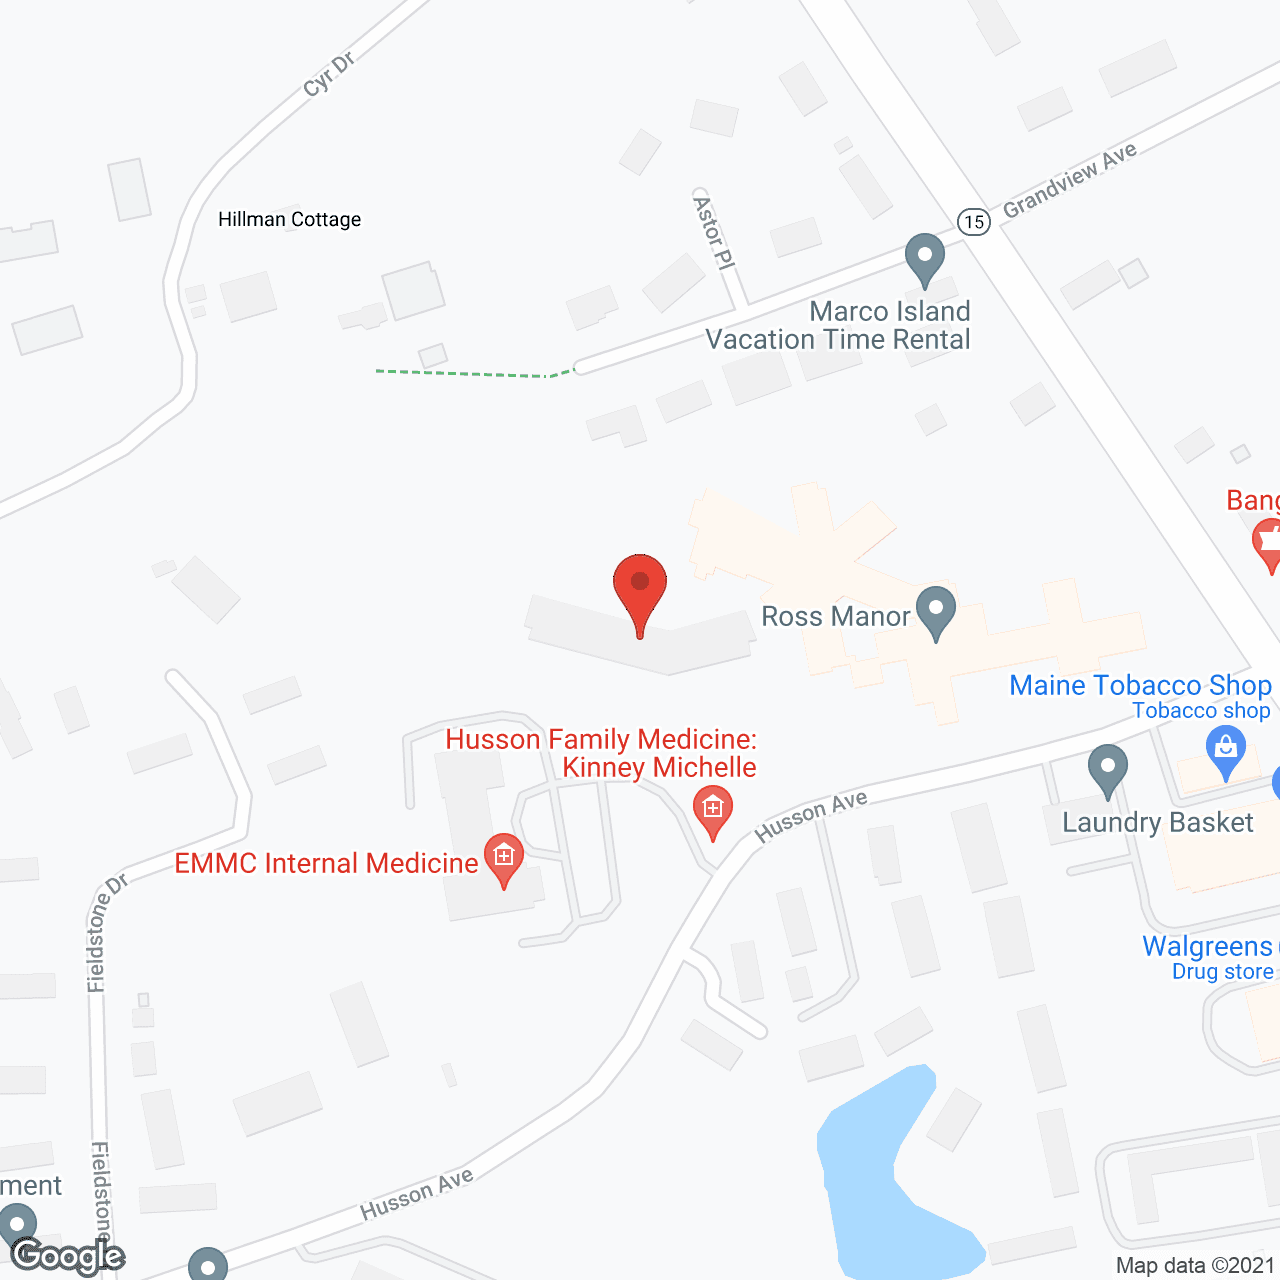 Ross Manor in google map